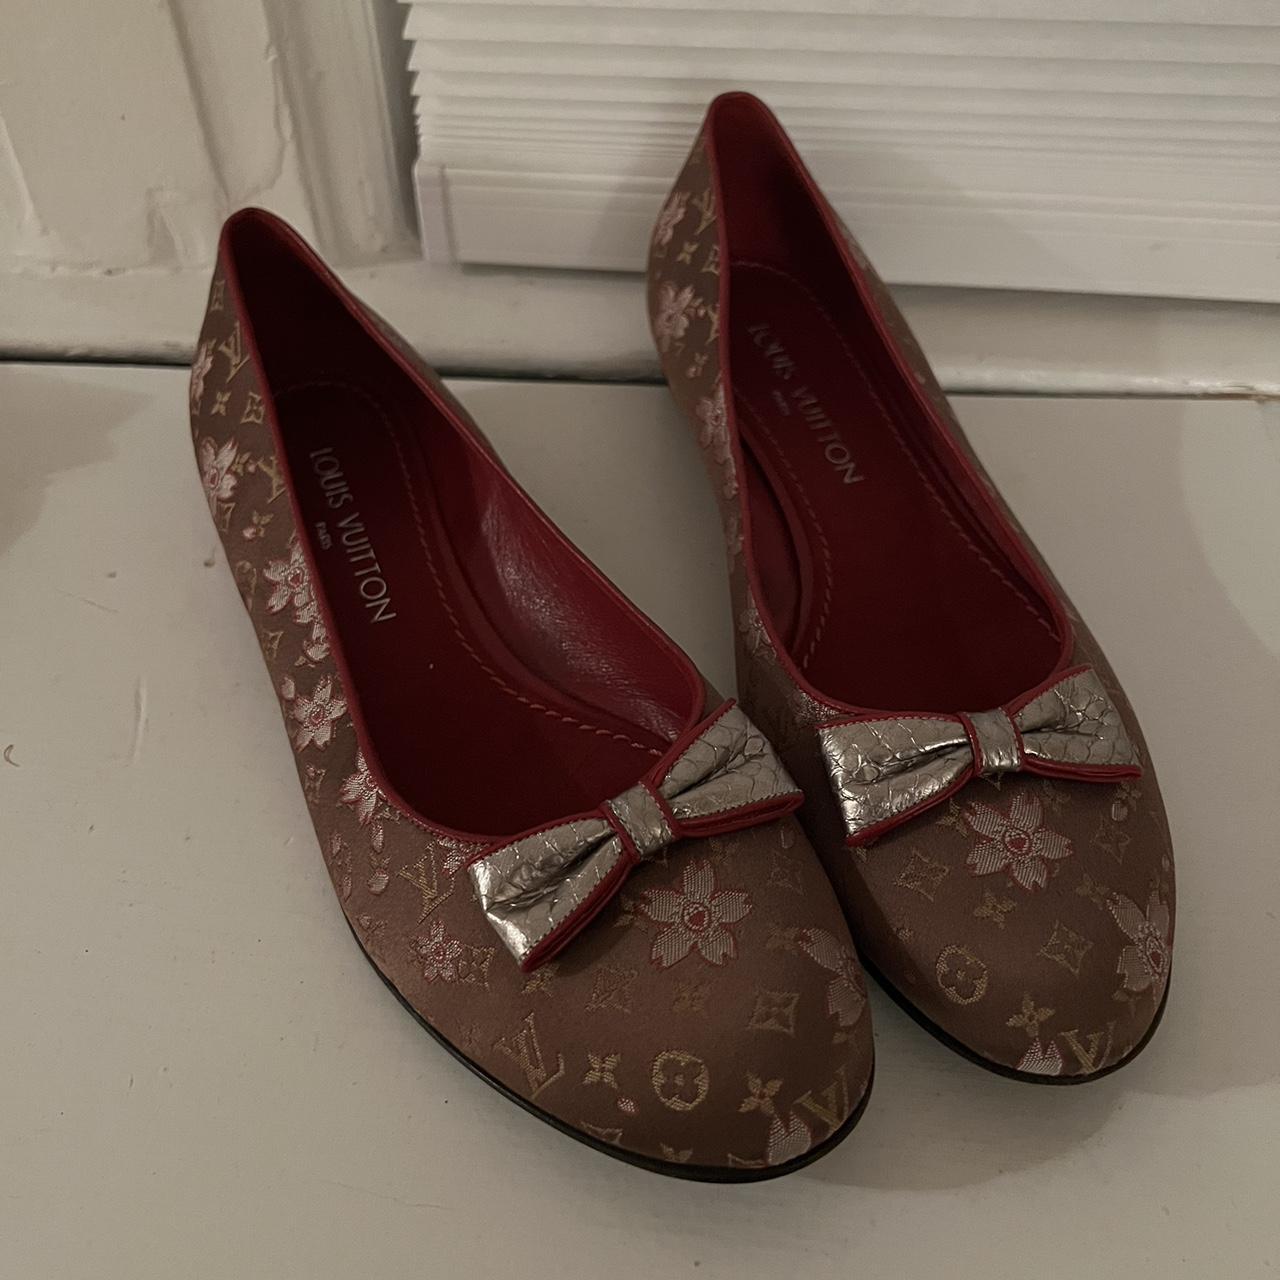 Red Louis Vuitton heels - Depop